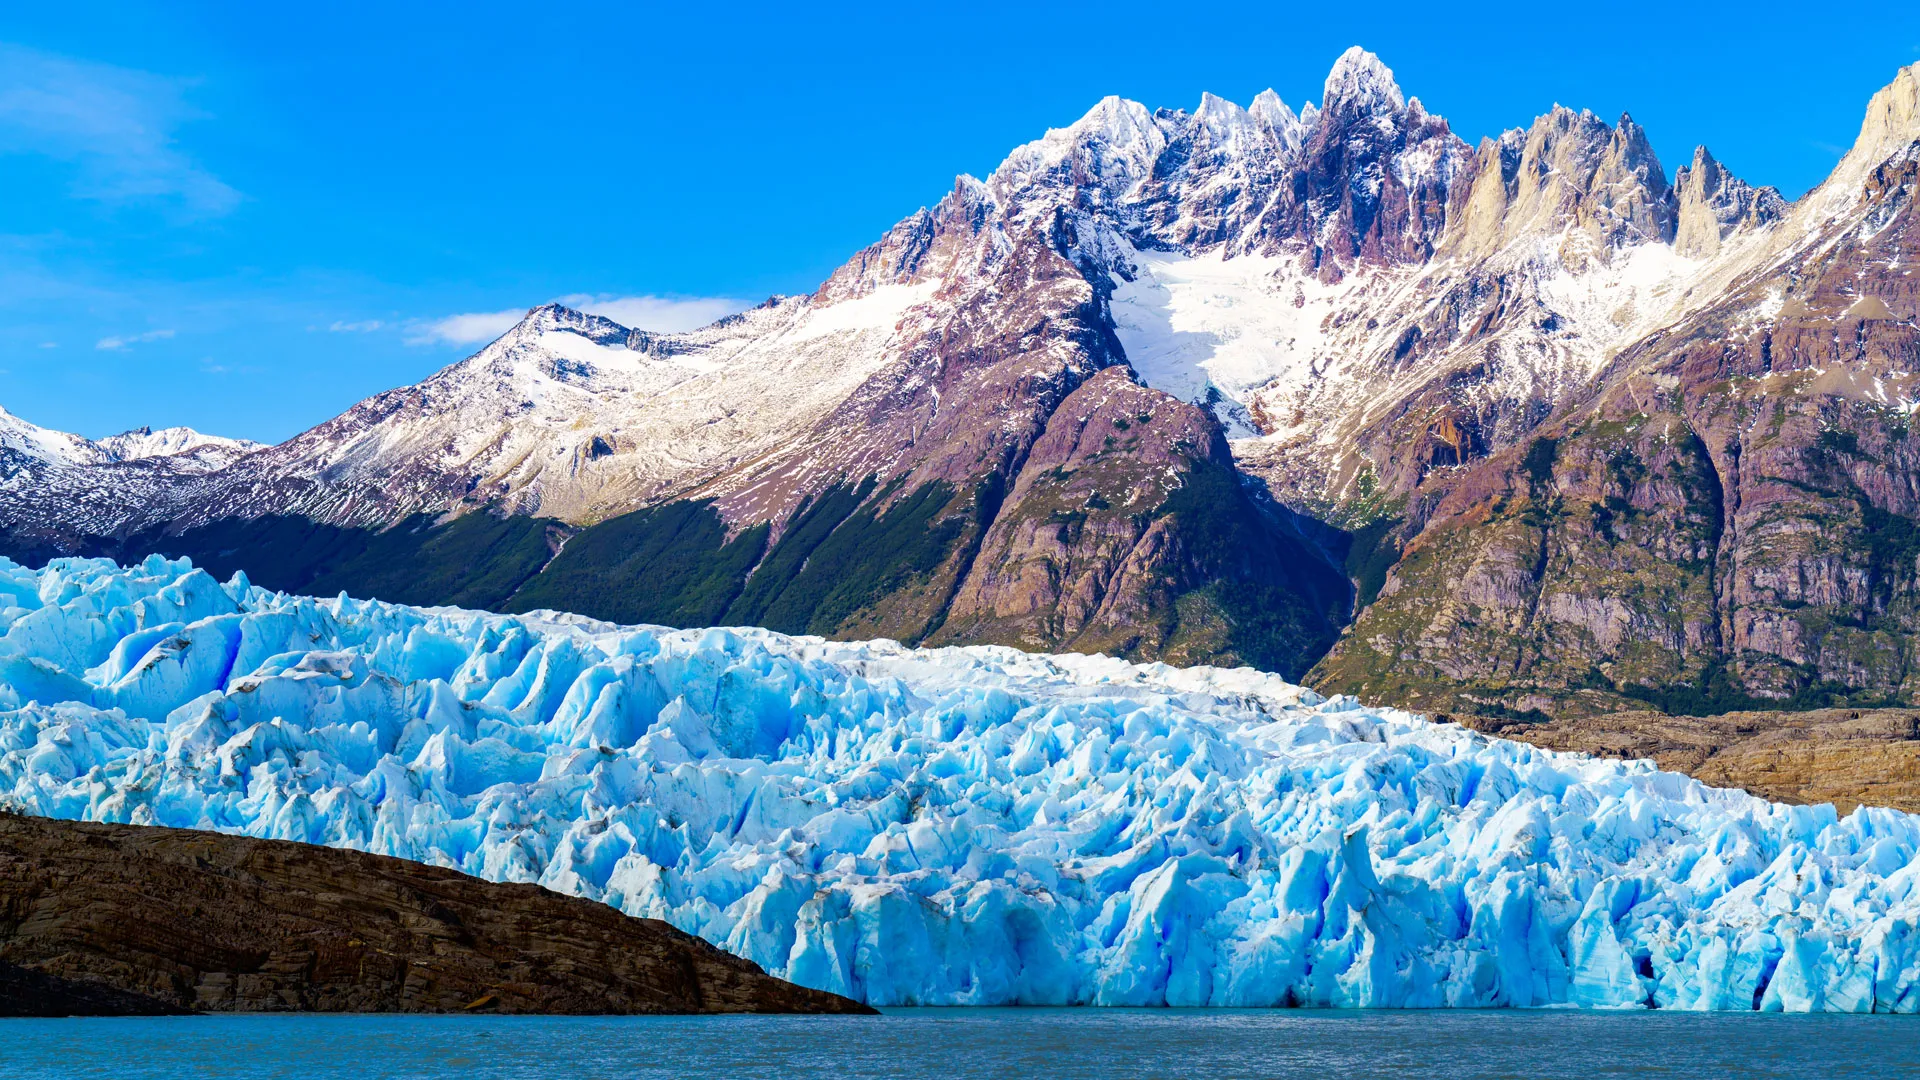 Glaciar Grey in Chile, South America | Glaciers - Rated 0.9